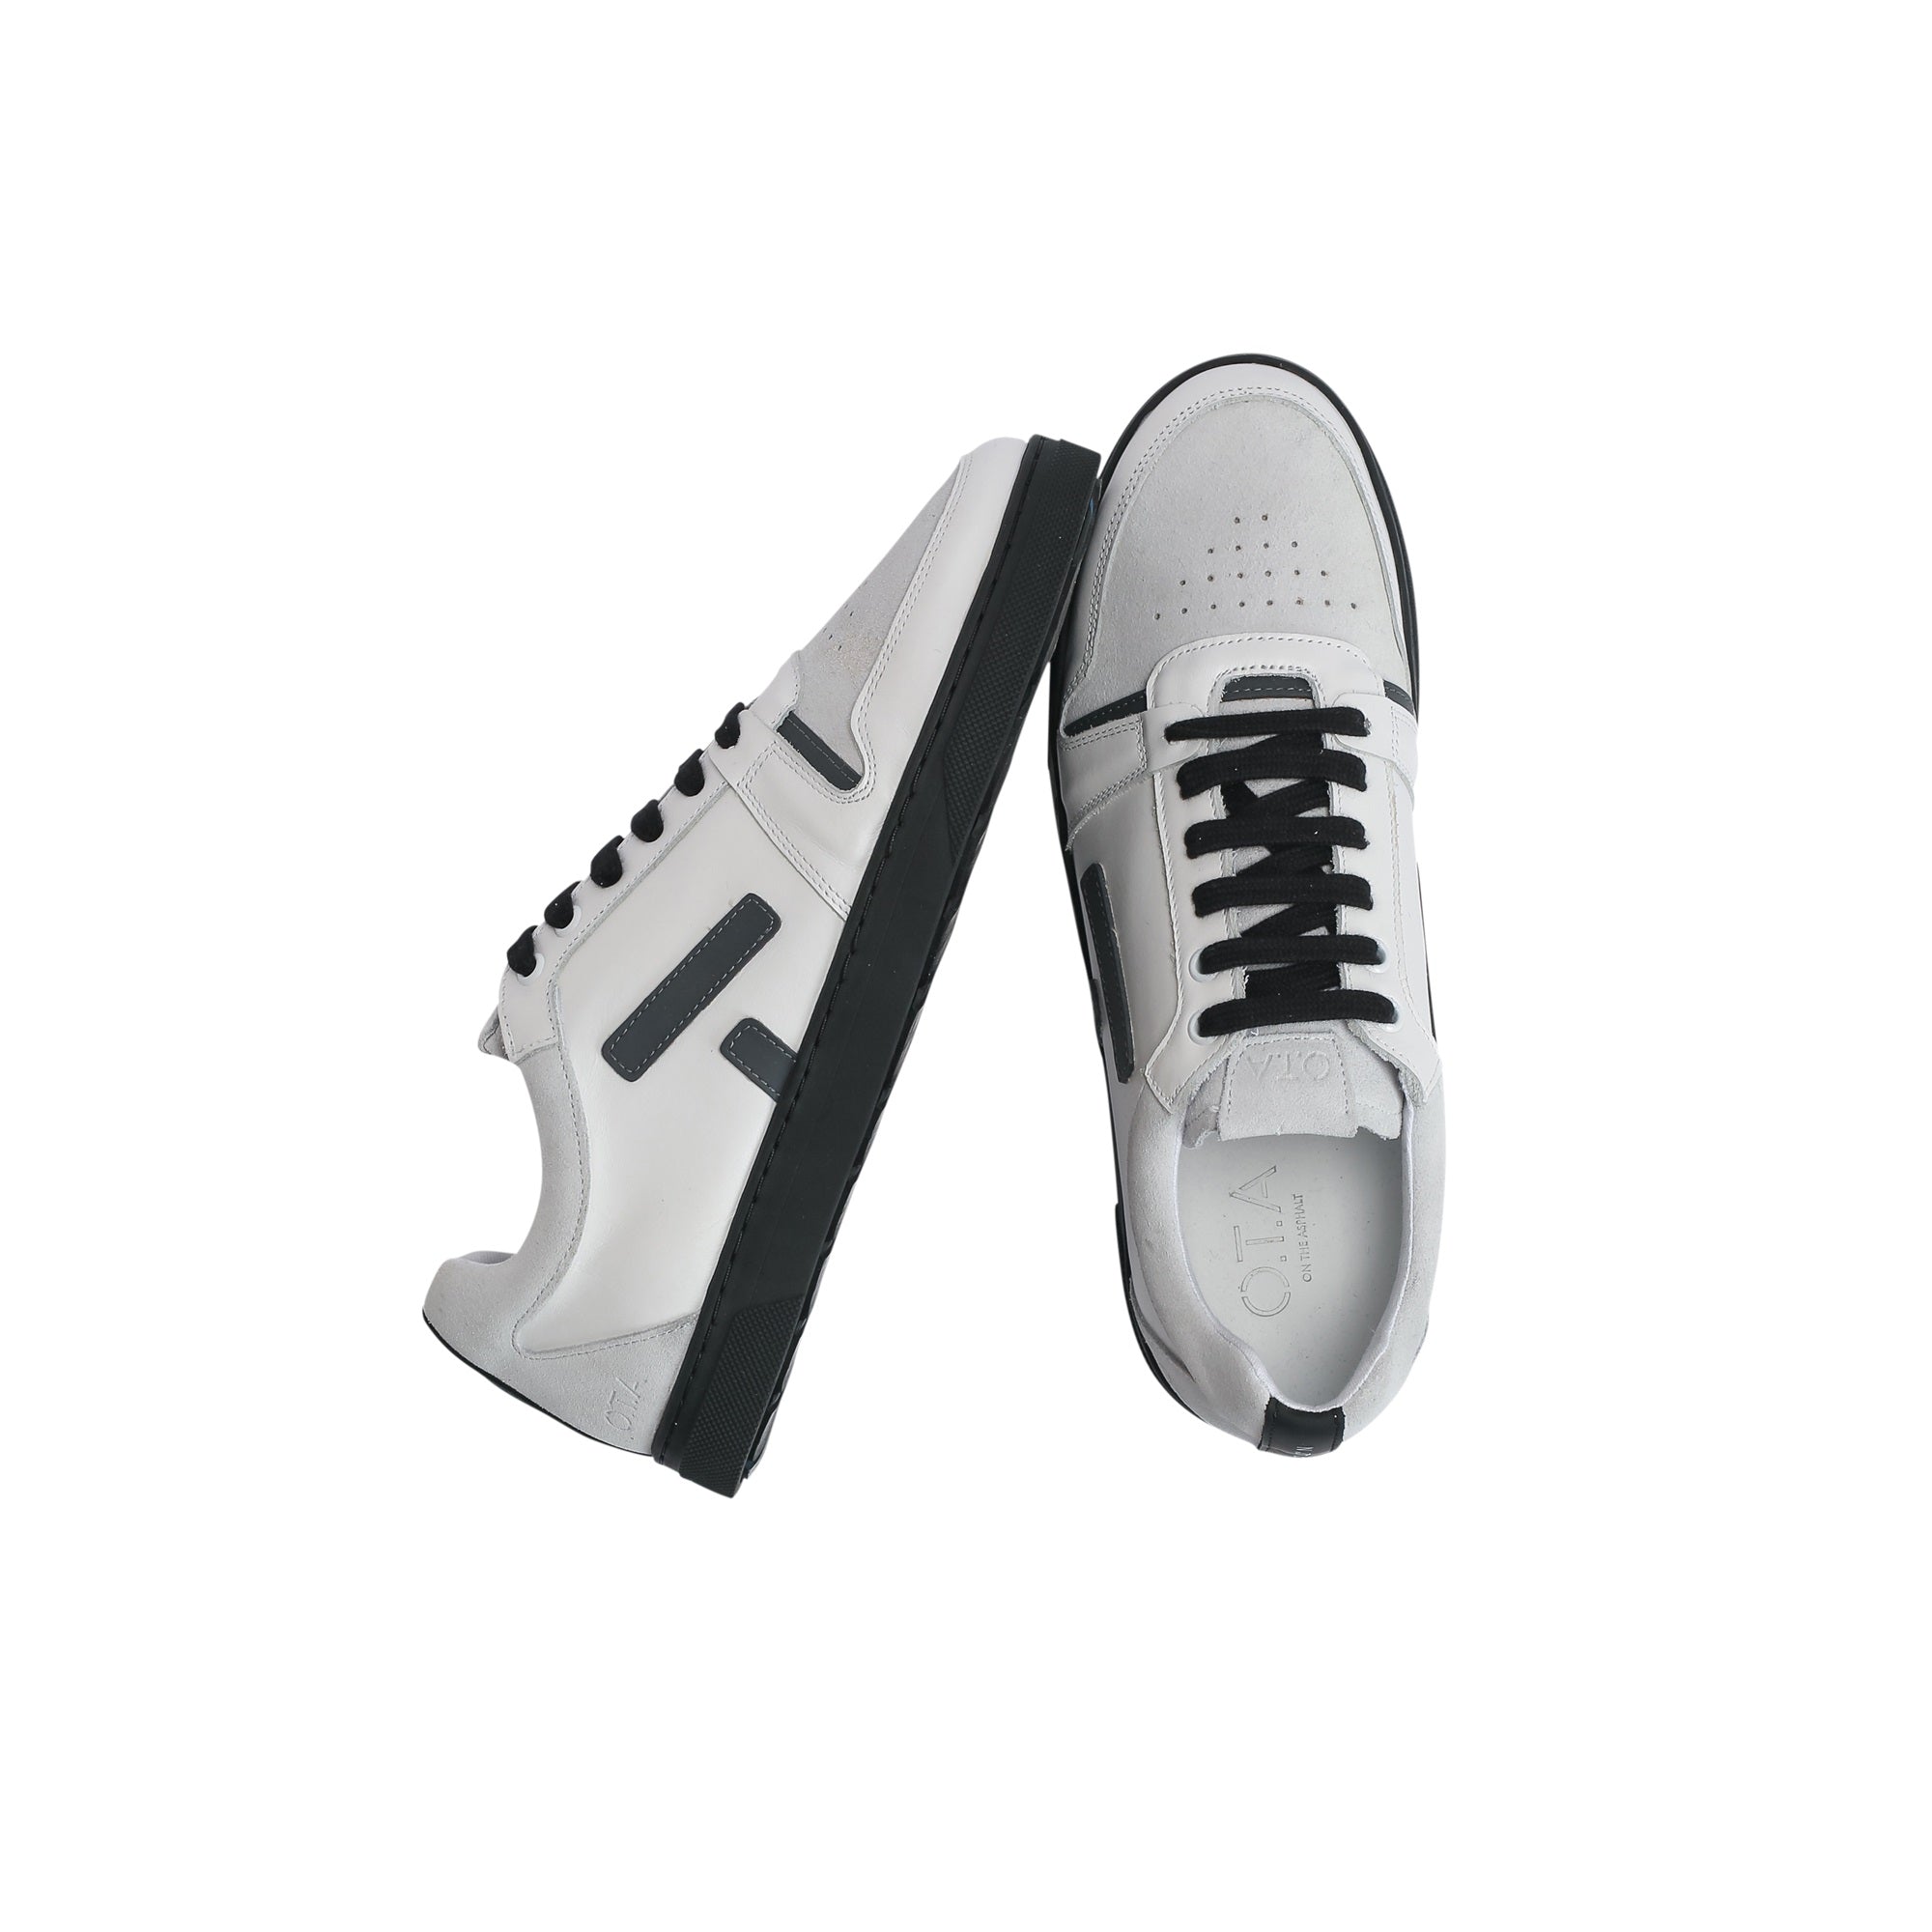 Sneakers en cuir Sansaho noir et blanc